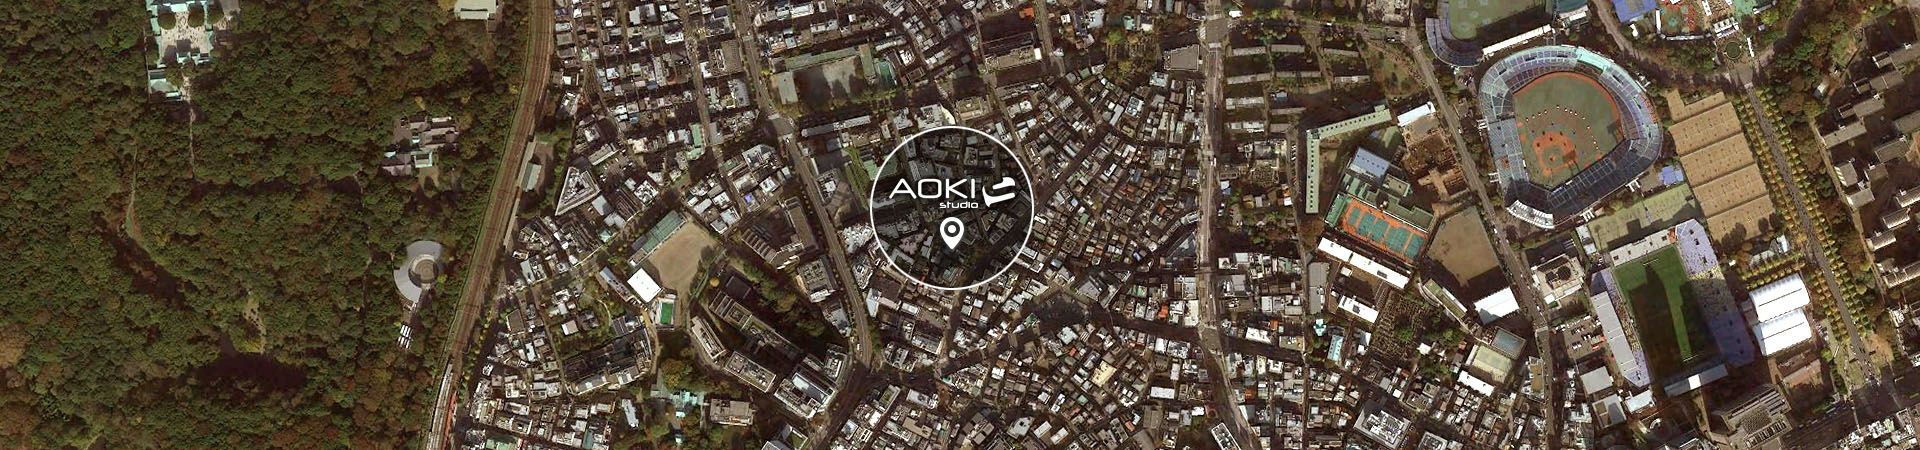 Find AOKIstudio on Google Maps